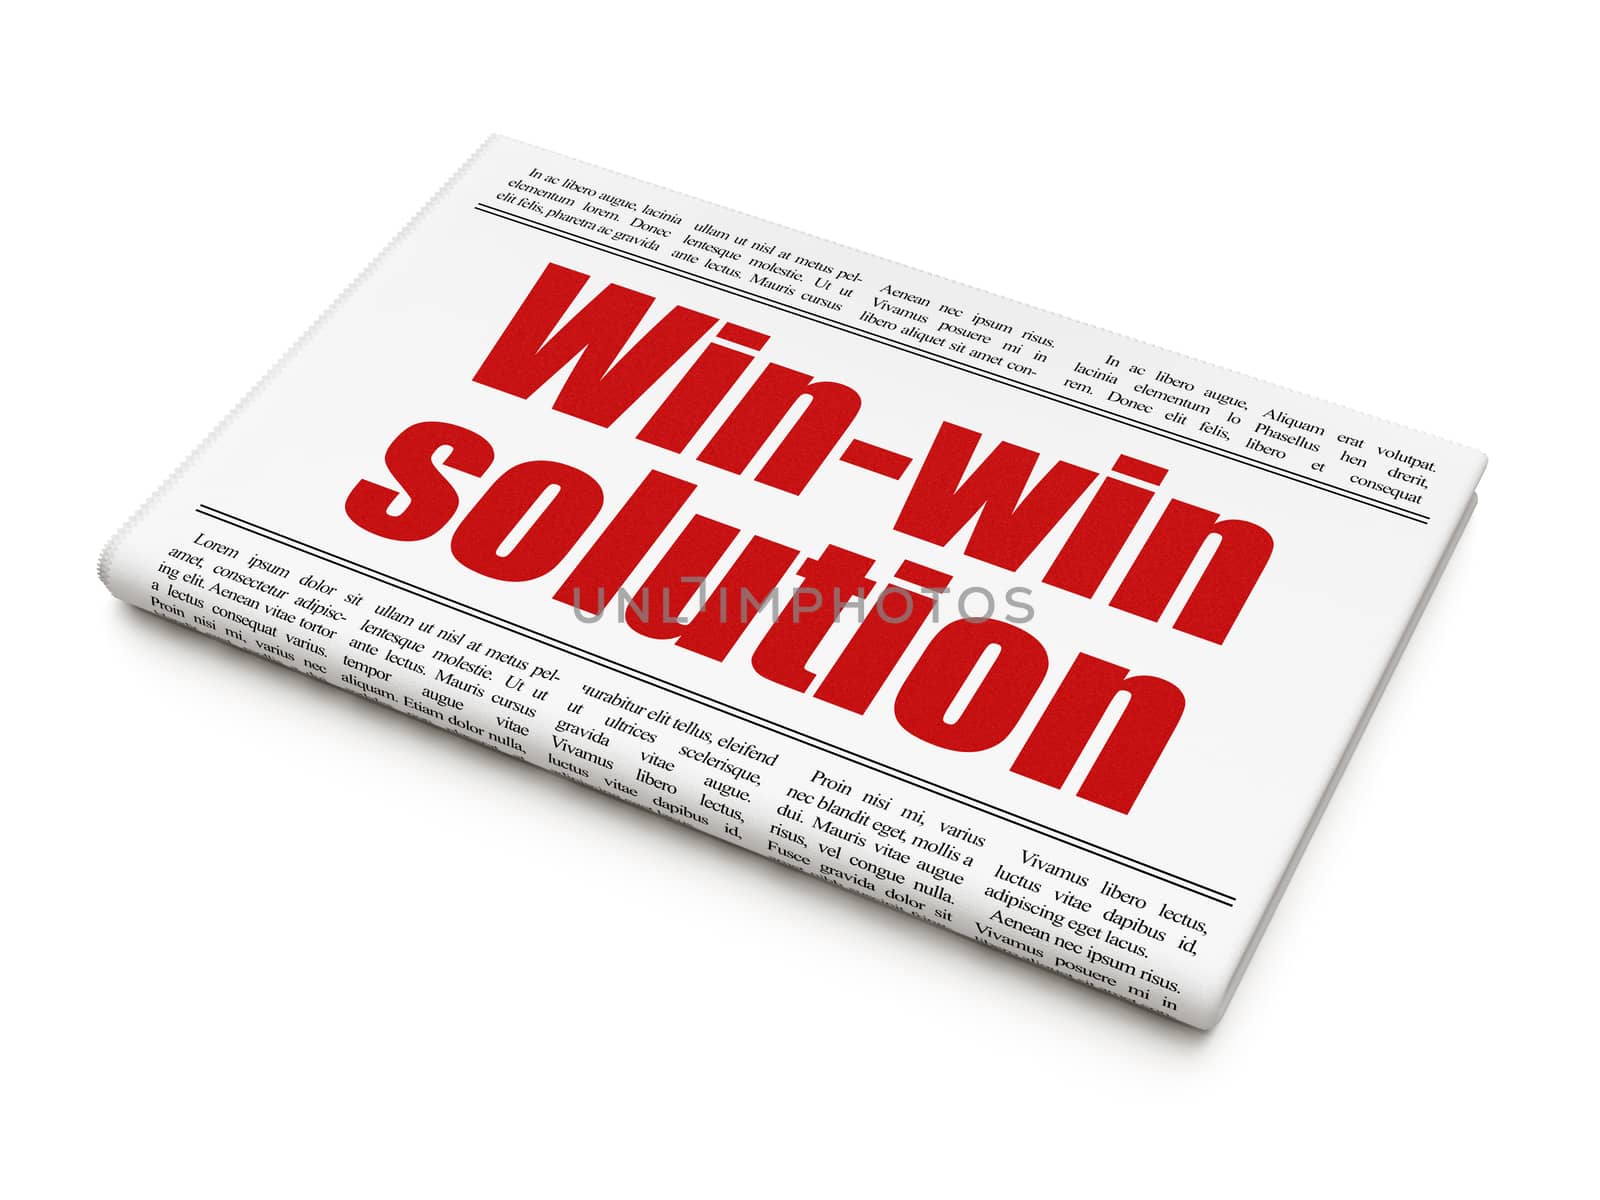 Finance concept: newspaper headline Win-win Solution by maxkabakov